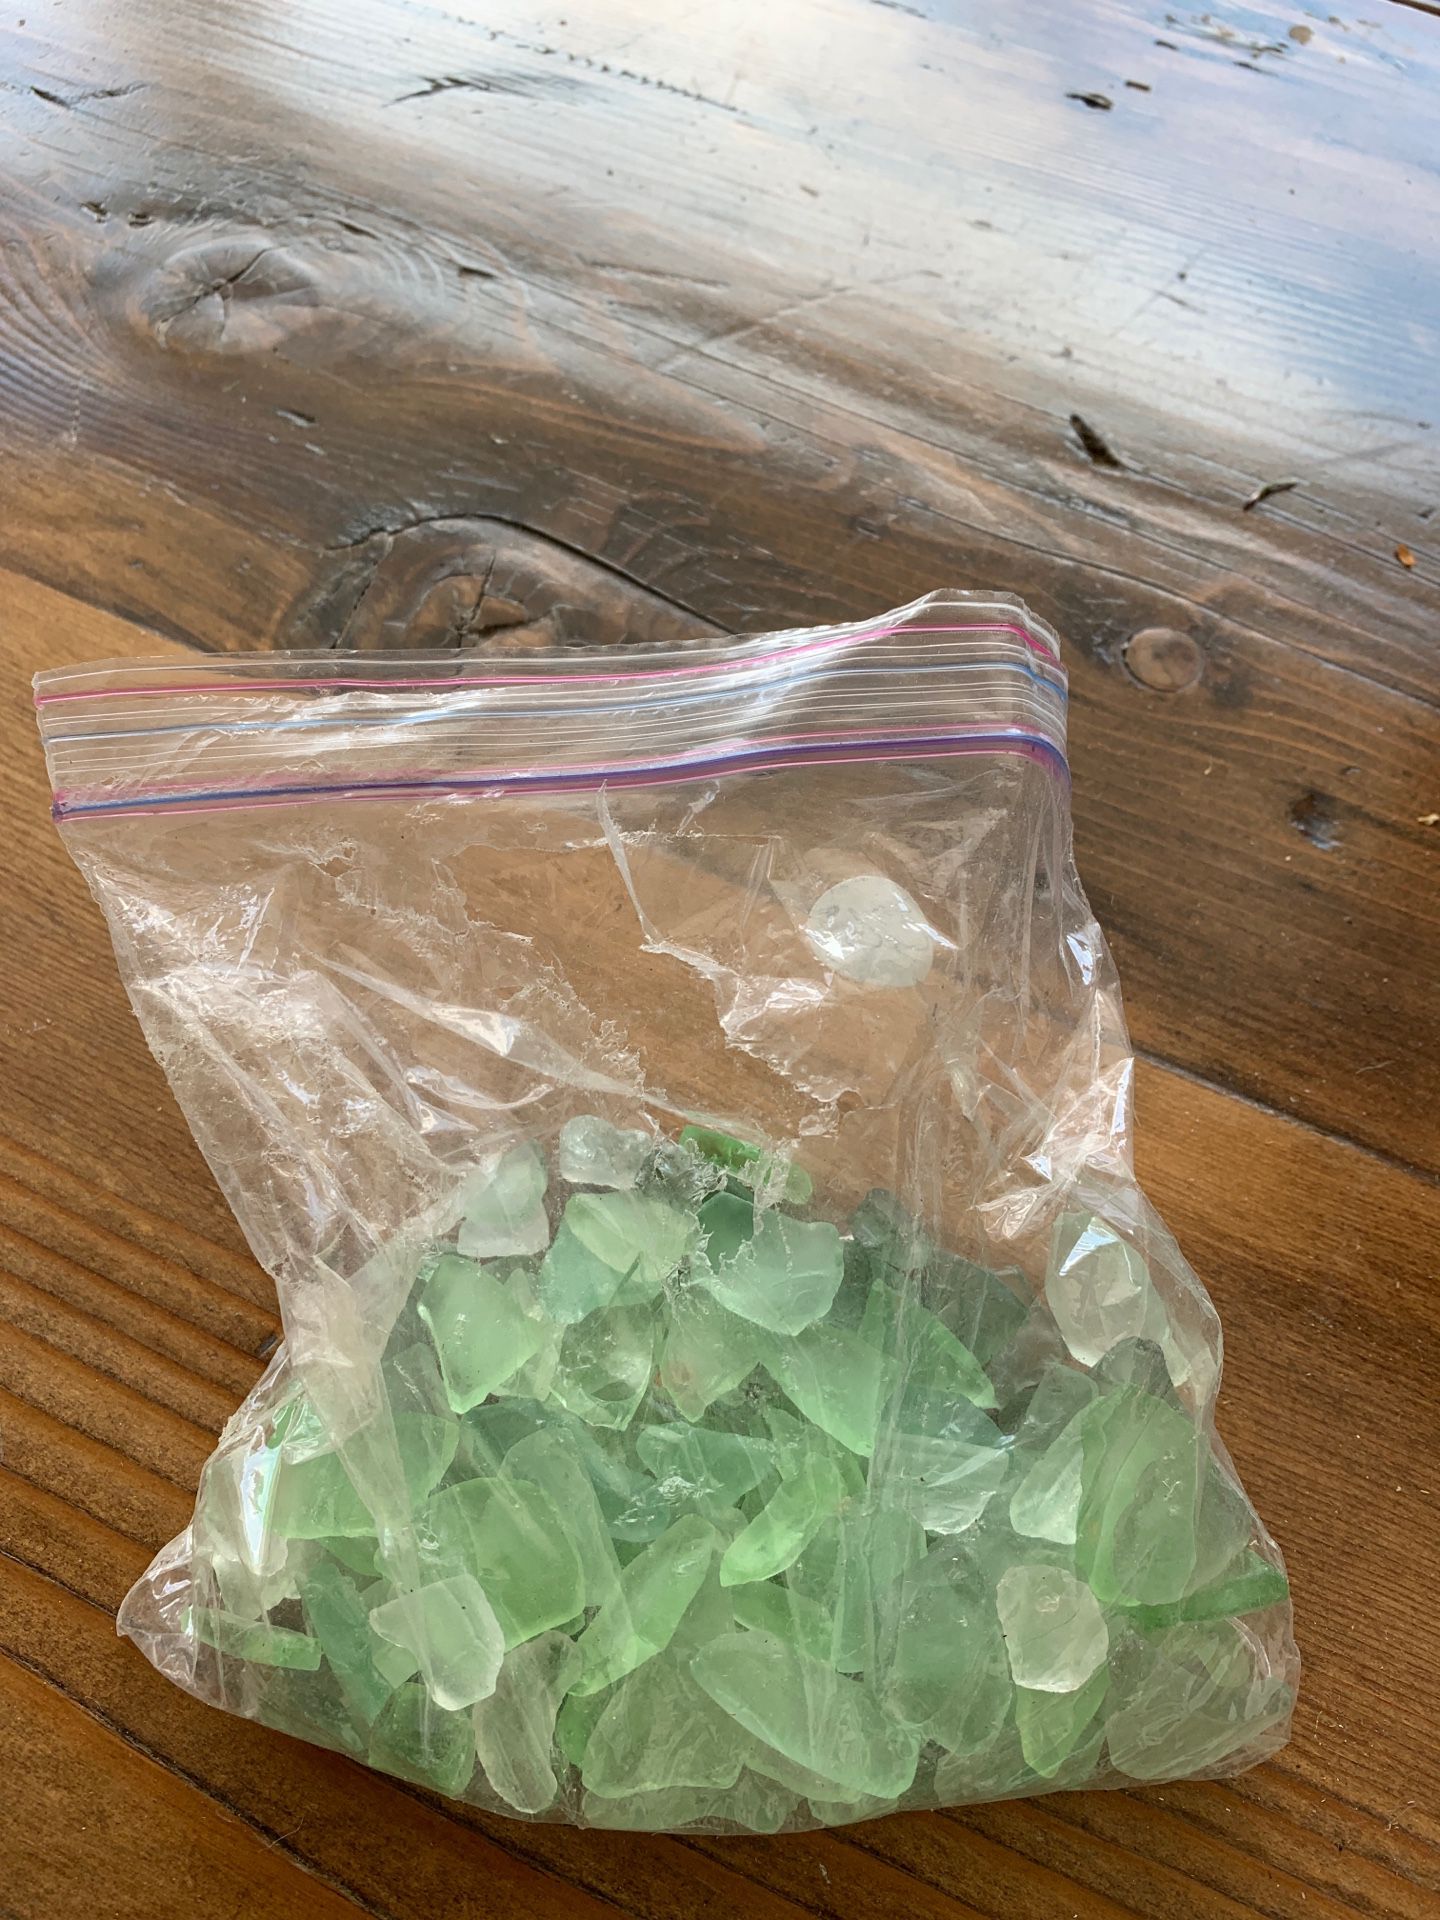 Bag of green glass rocks